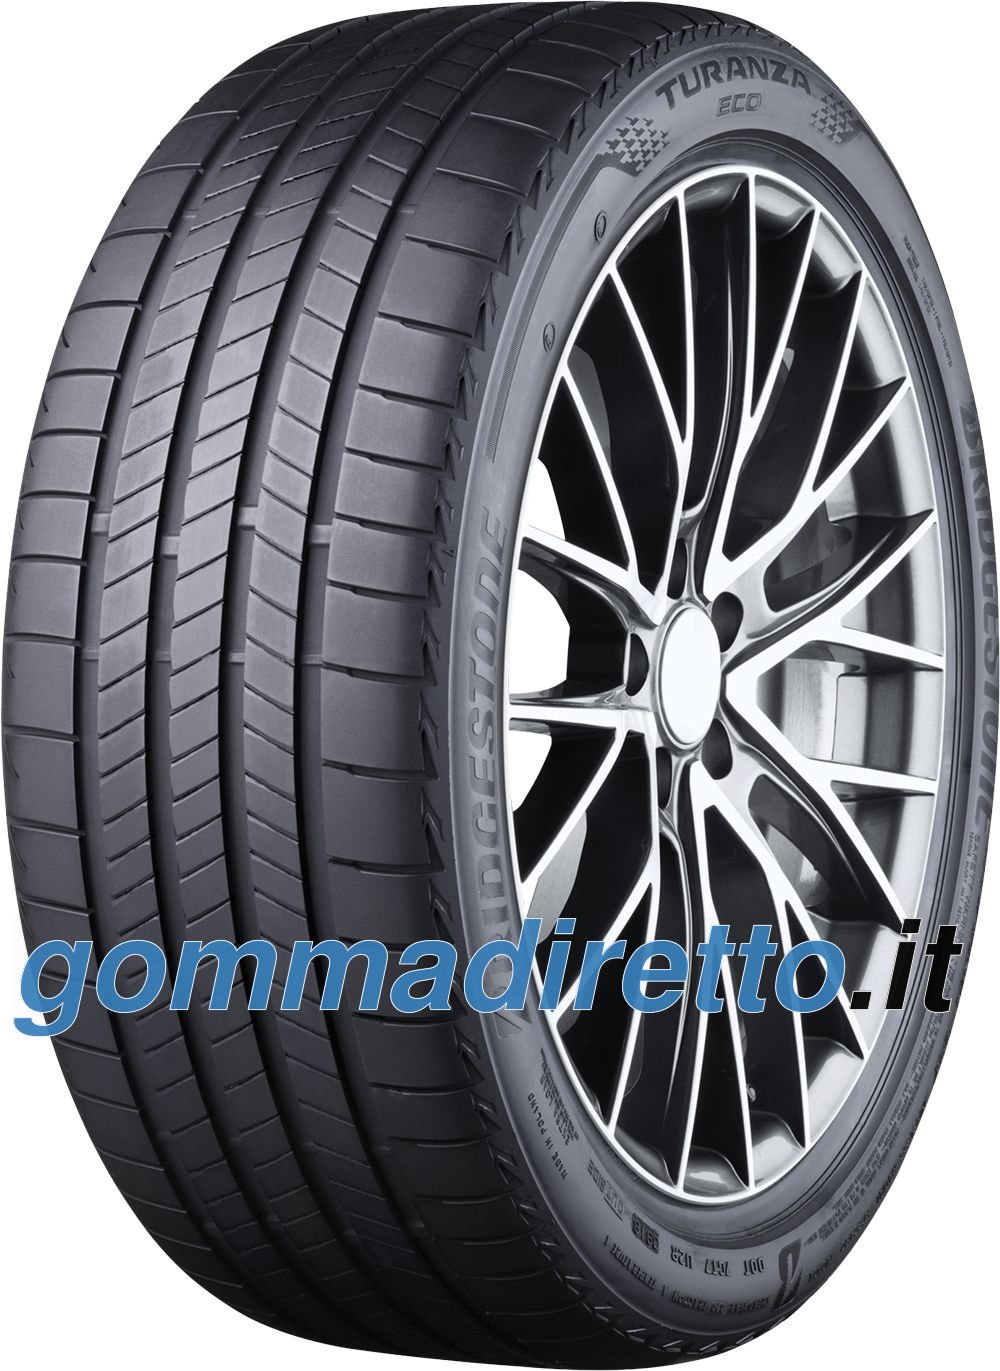 Image of Bridgestone Turanza Eco ( 185/55 R15 86T XL Enliten / EV )